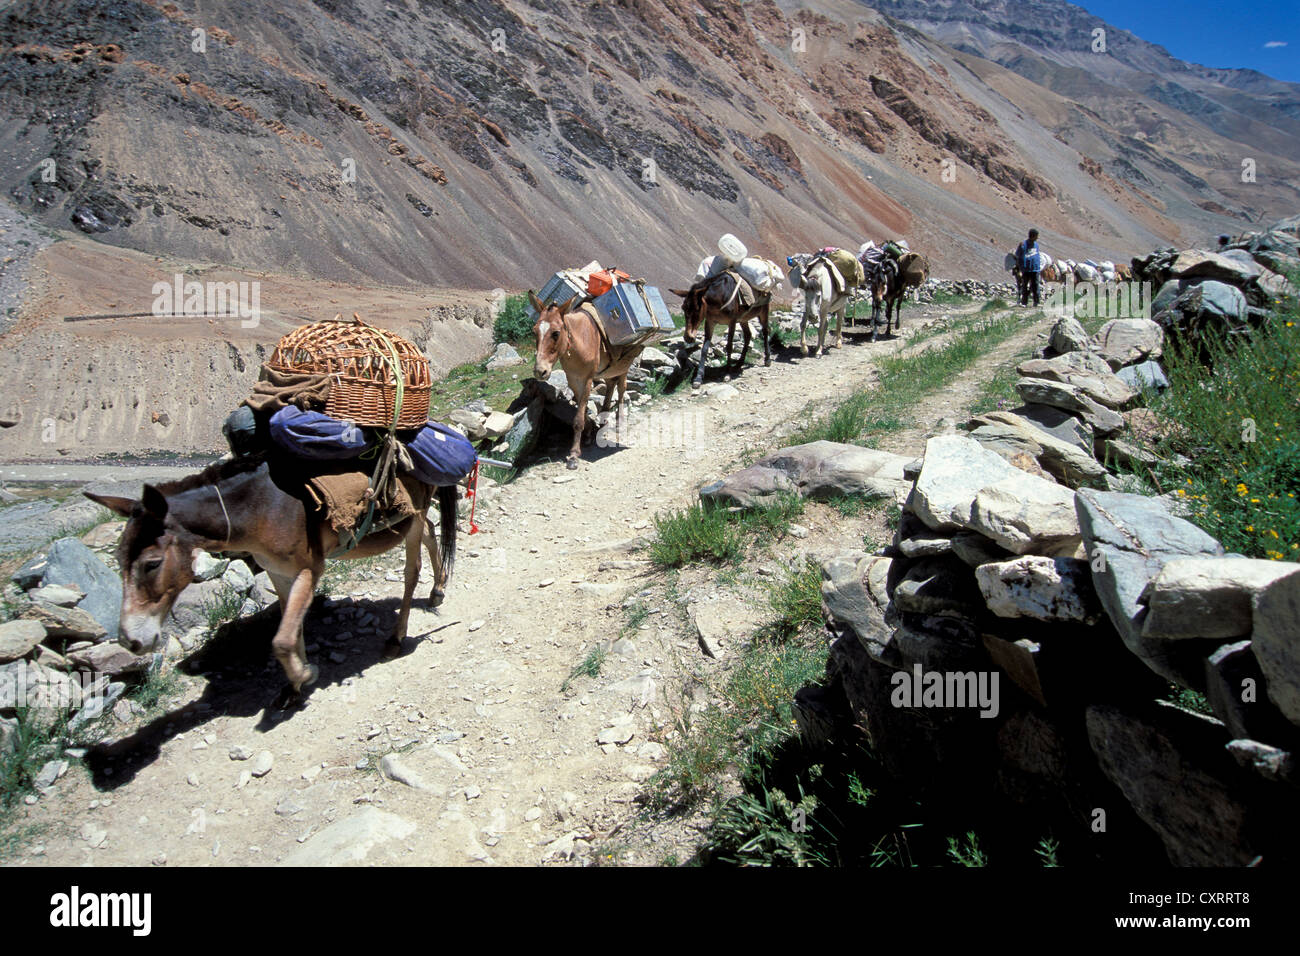 Laden ânes près du village de Tetha, Zanskar, Ladakh, Himalaya indien, le Jammu-et-Cachemire, l'Inde du Nord, Inde, Asie Banque D'Images